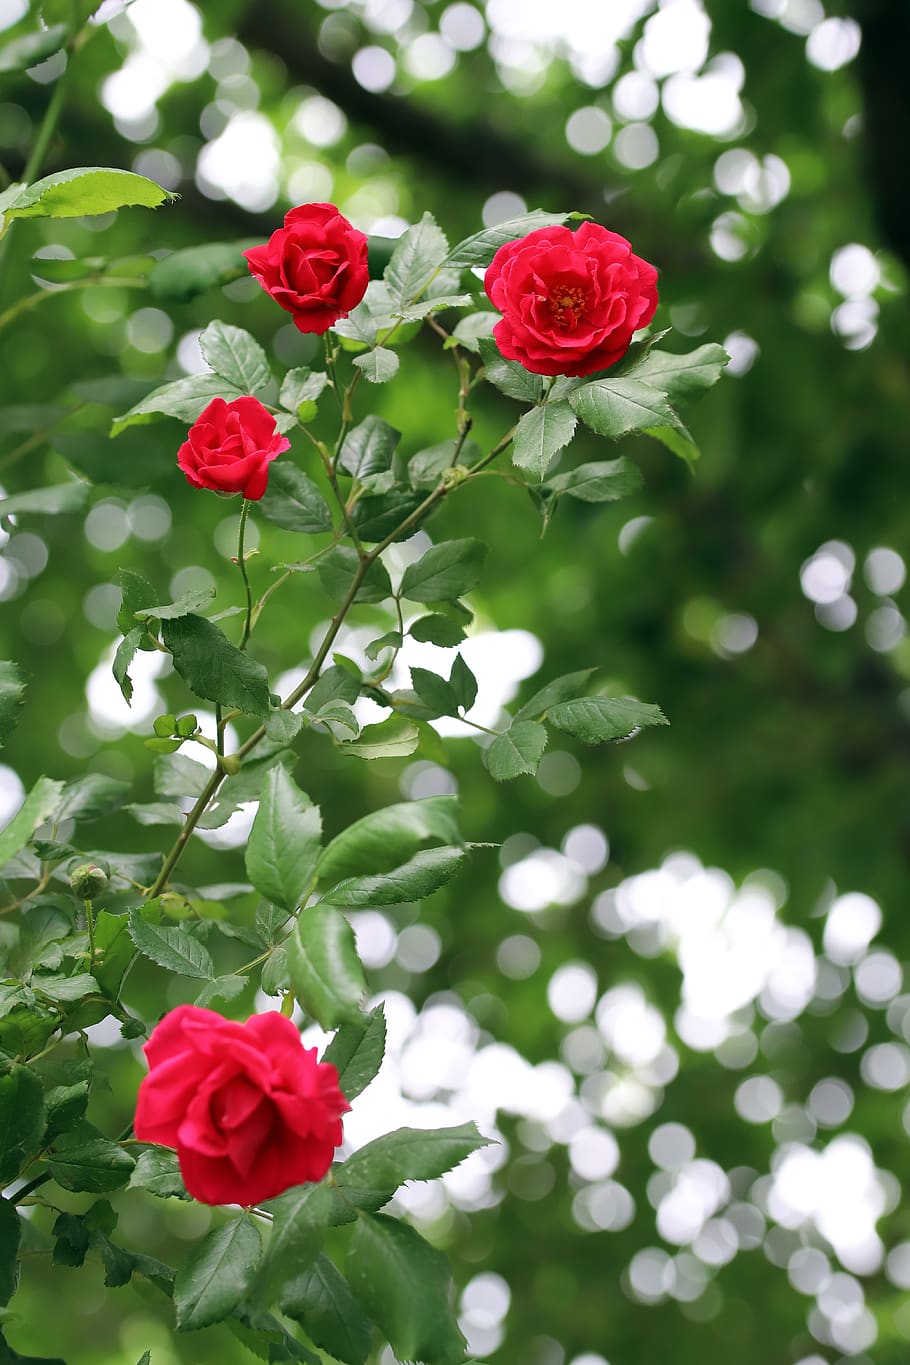 rose, petal, flowers, beautiful, pretty flowers, nature, buds, rose garden, fresh medium, plants